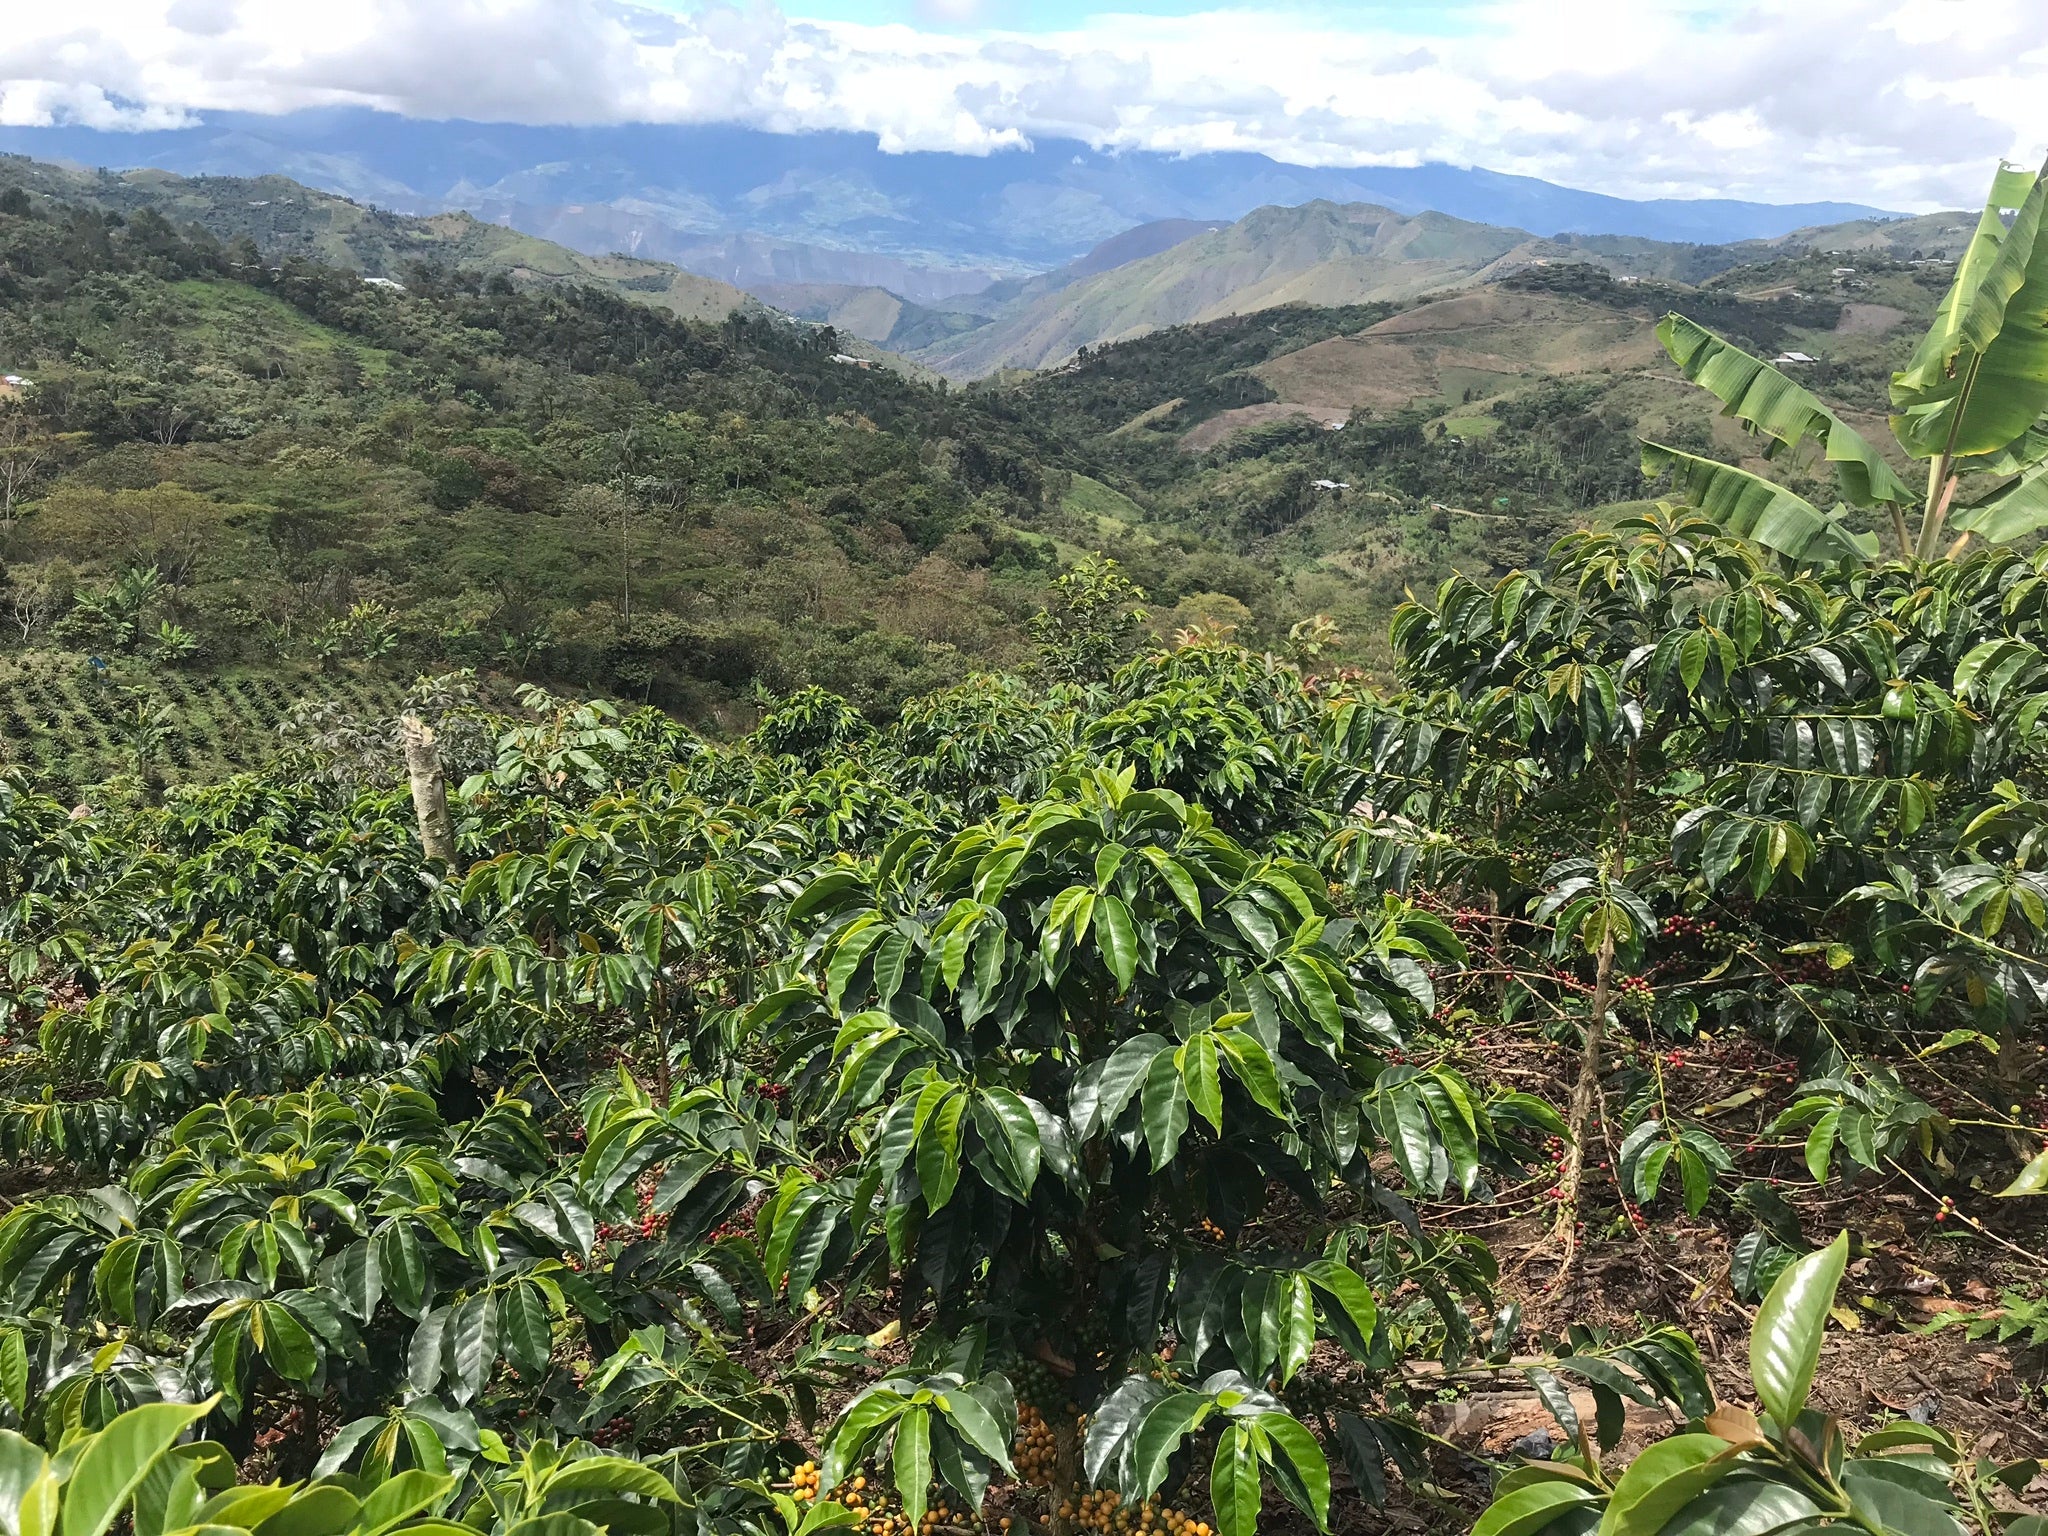 Paisaje verde montañoso de Perú con plantación de café en primer término. 